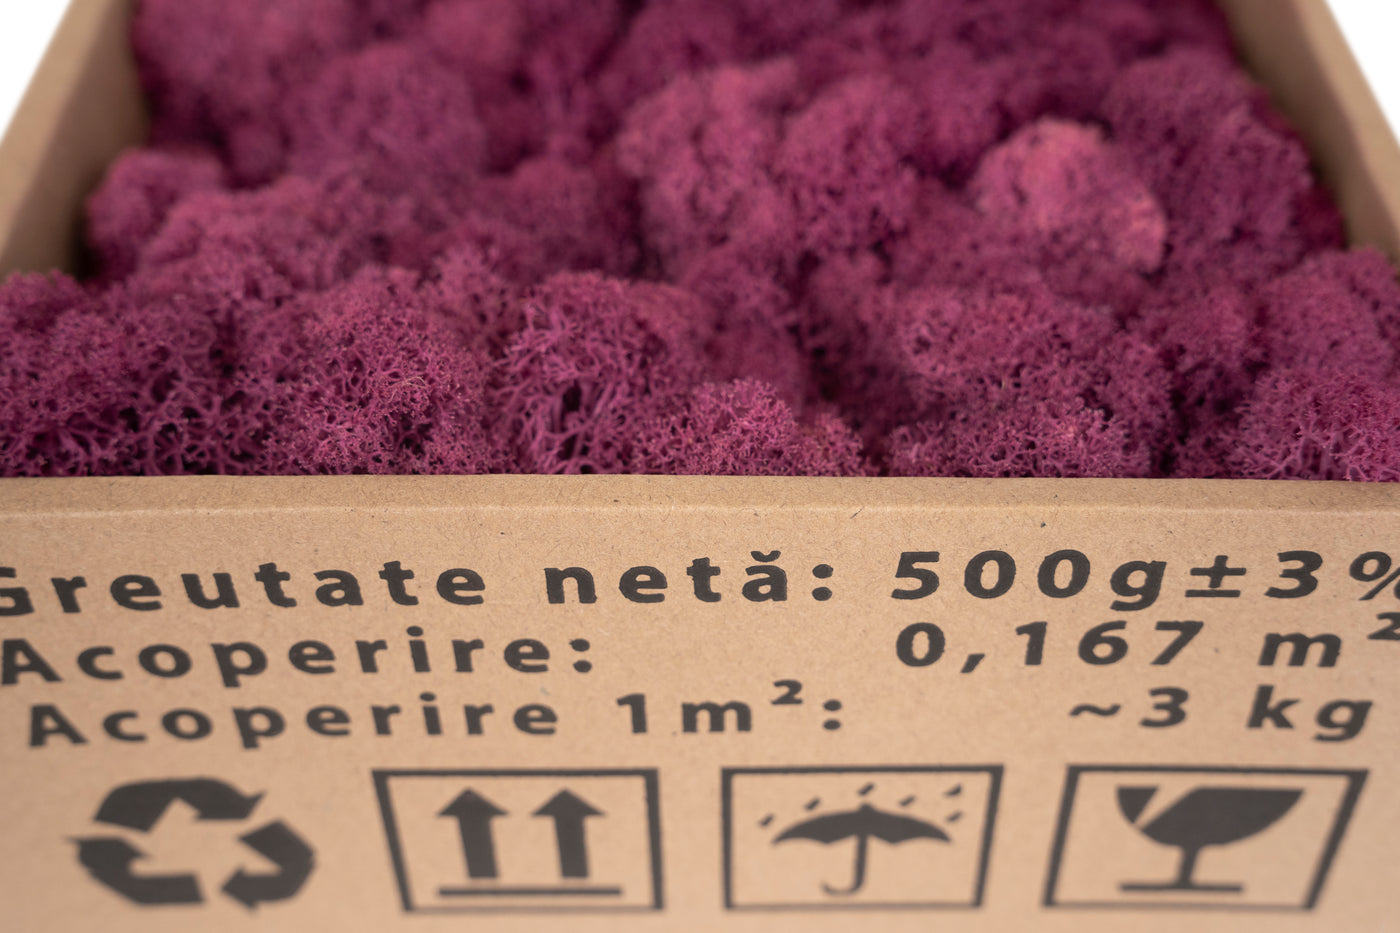 Licheni curatati si fara radacina conservati 500g NET, calitate ULTRA PREMIUM, violet plum inchis RR46